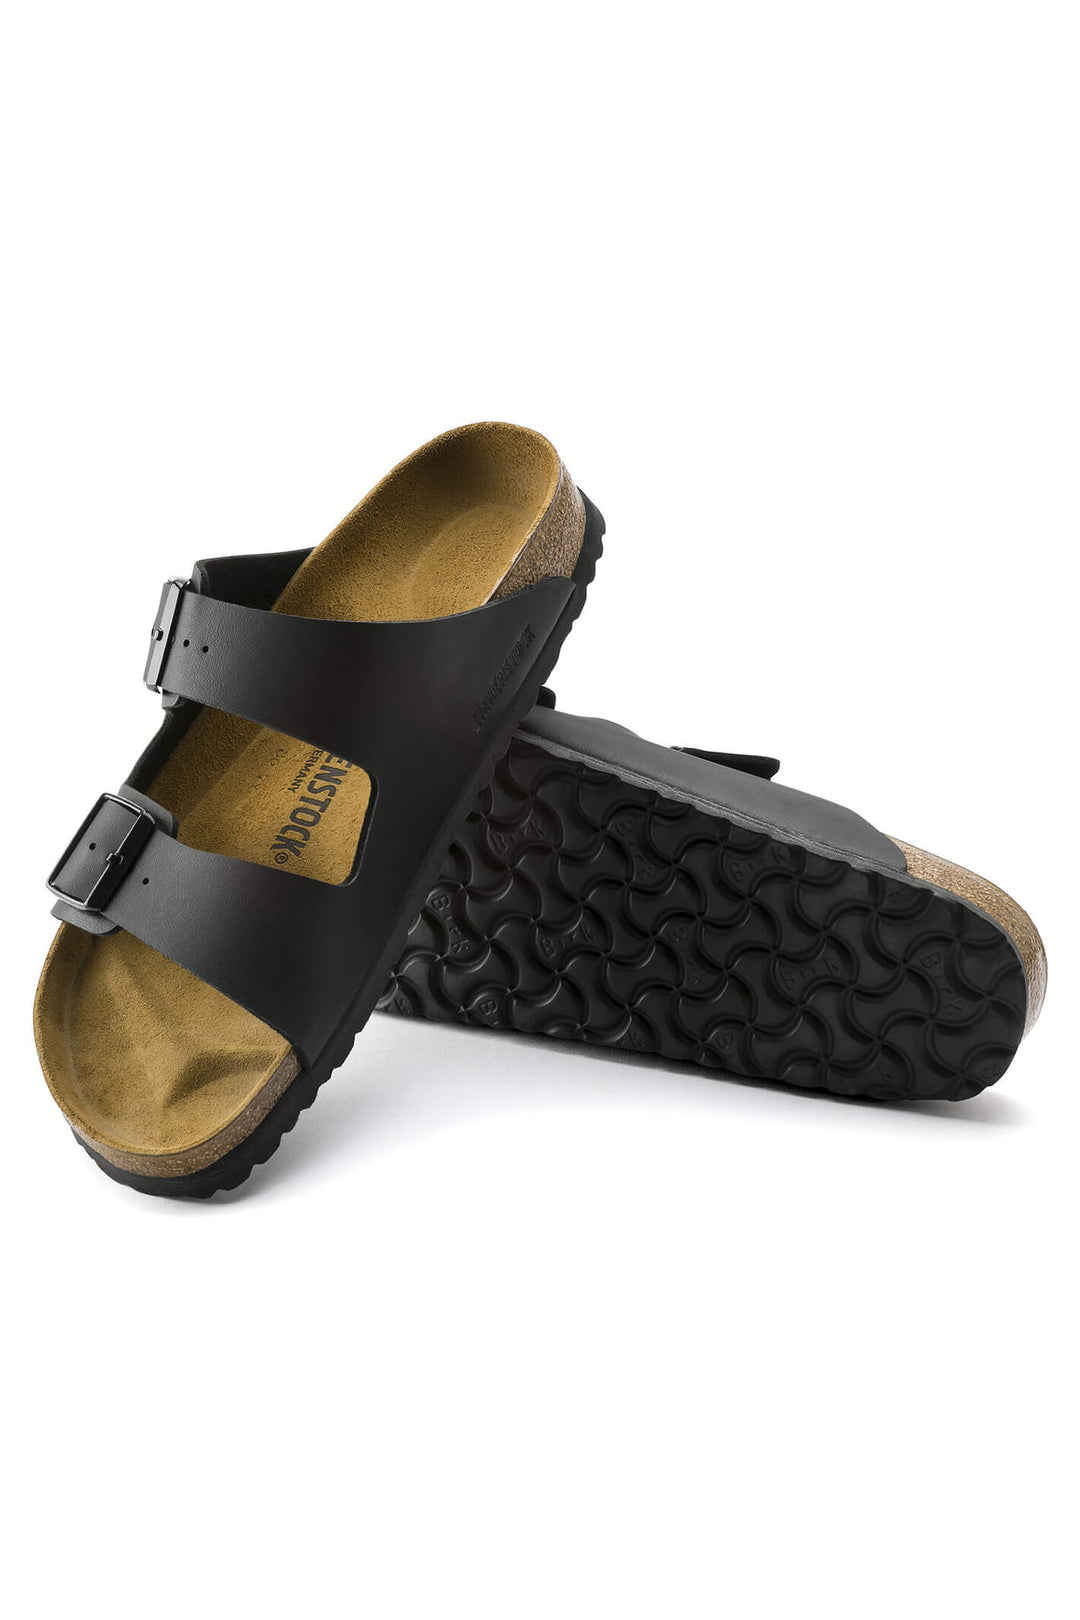 Birkenstock Arizona 0051793 Black Narrow Fit Sandal - Shirley Allum